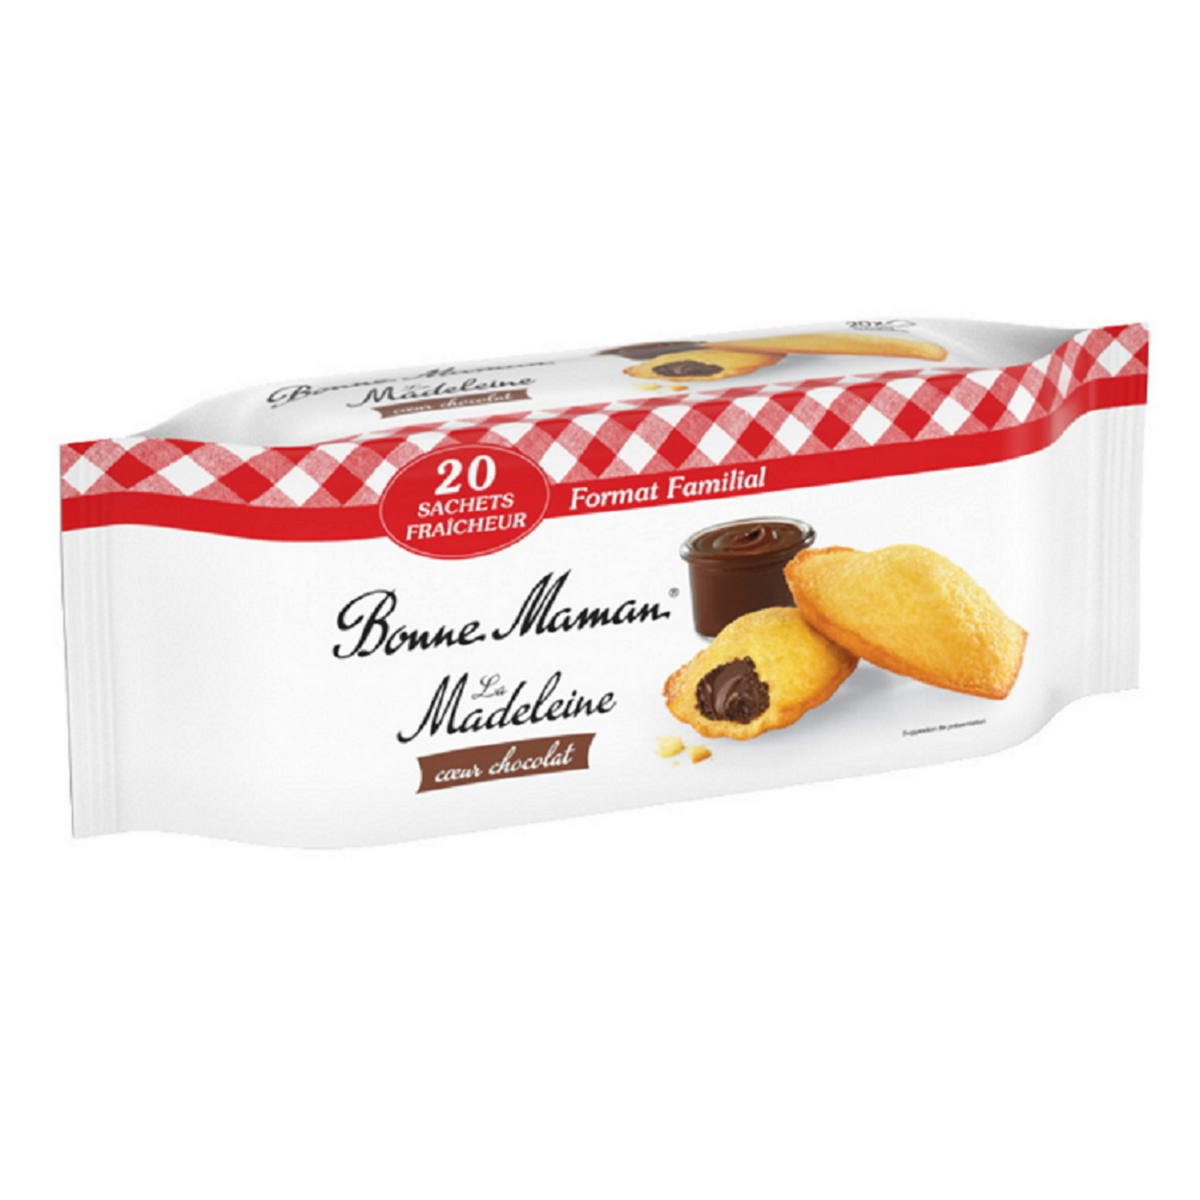 BONNE MAMAN Madeleine fourrée au chocolat sachets individuels 20 madeleines 600g